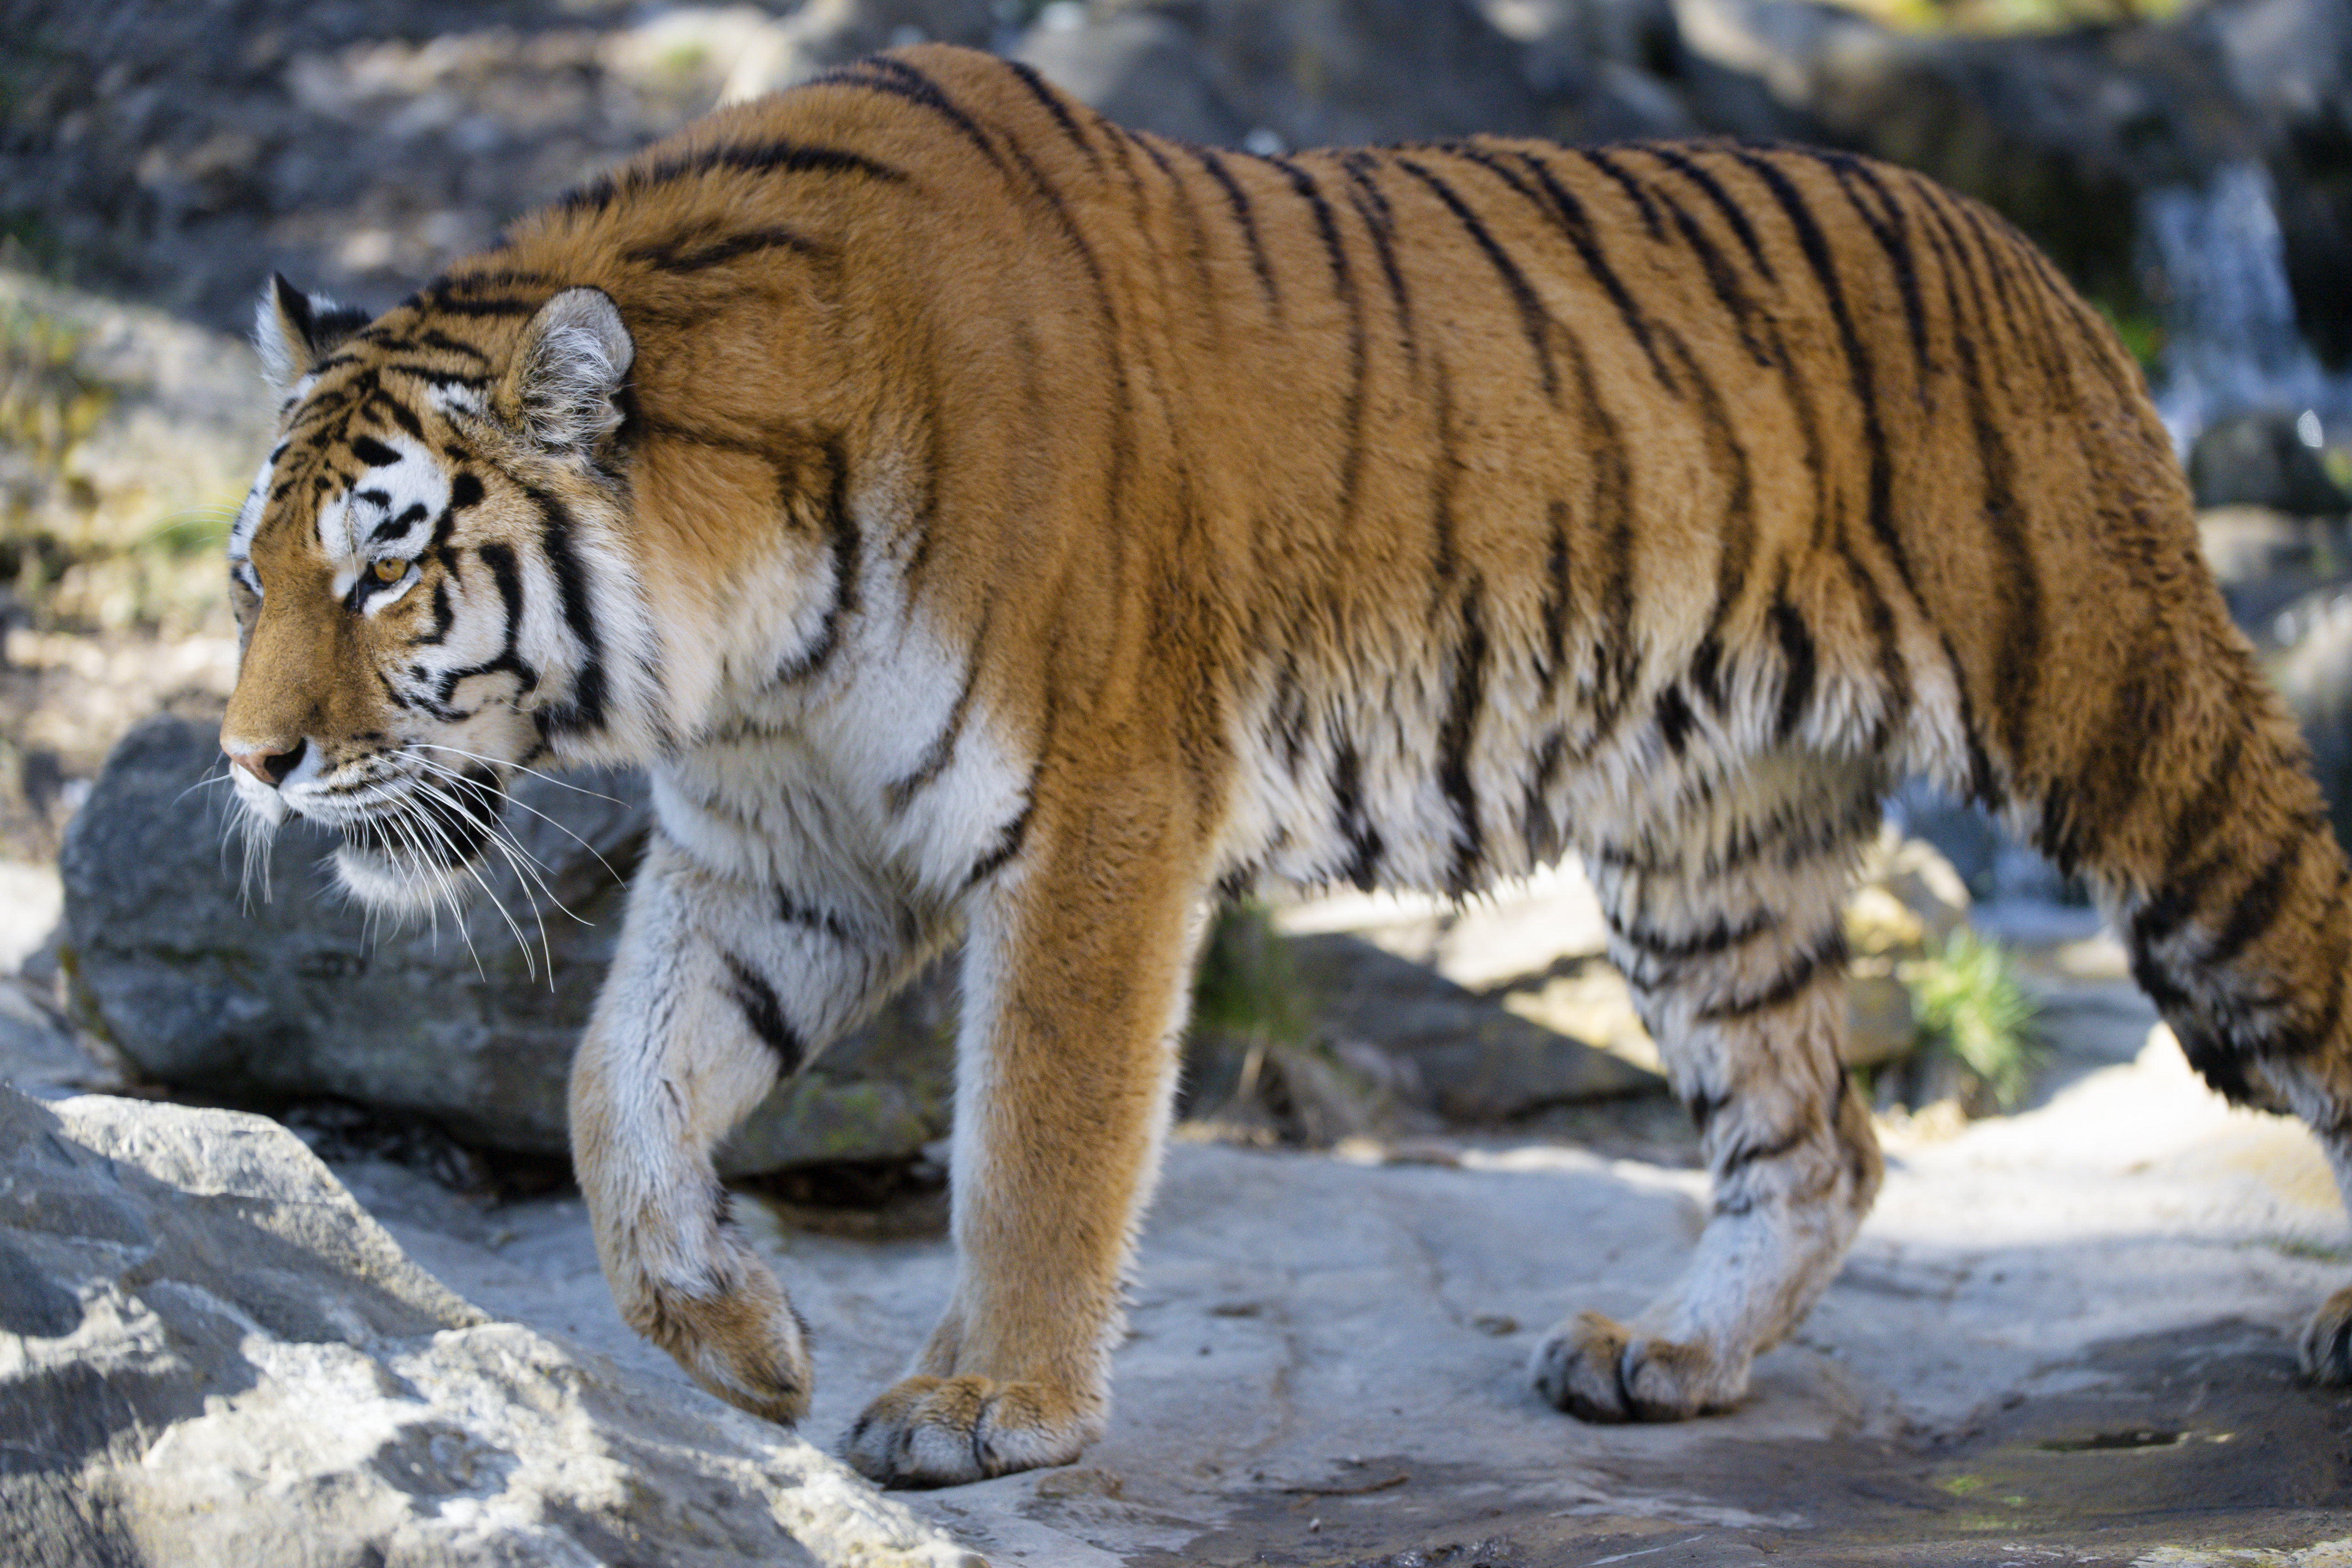 New Lock Screen Wallpapers opinion, animals, predator, big cat, sight, tiger, profile